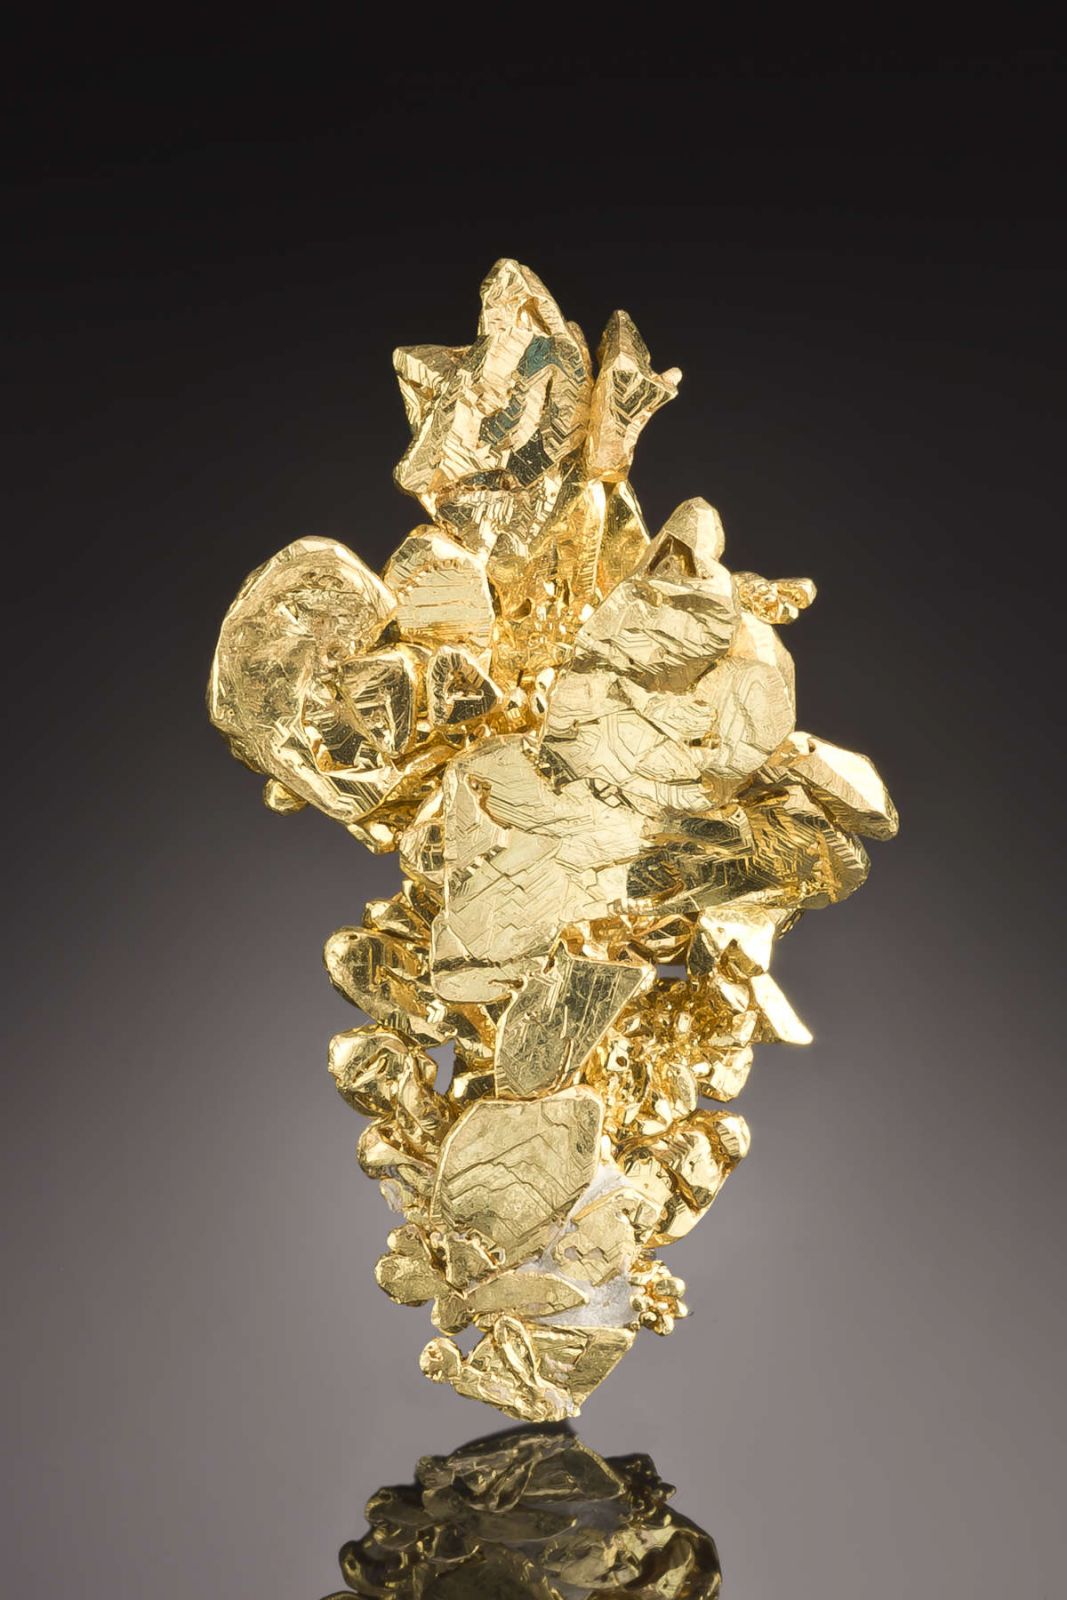 Gold - DEN13-1030 - Eagles Nest Mine - USA Mineral Specimen